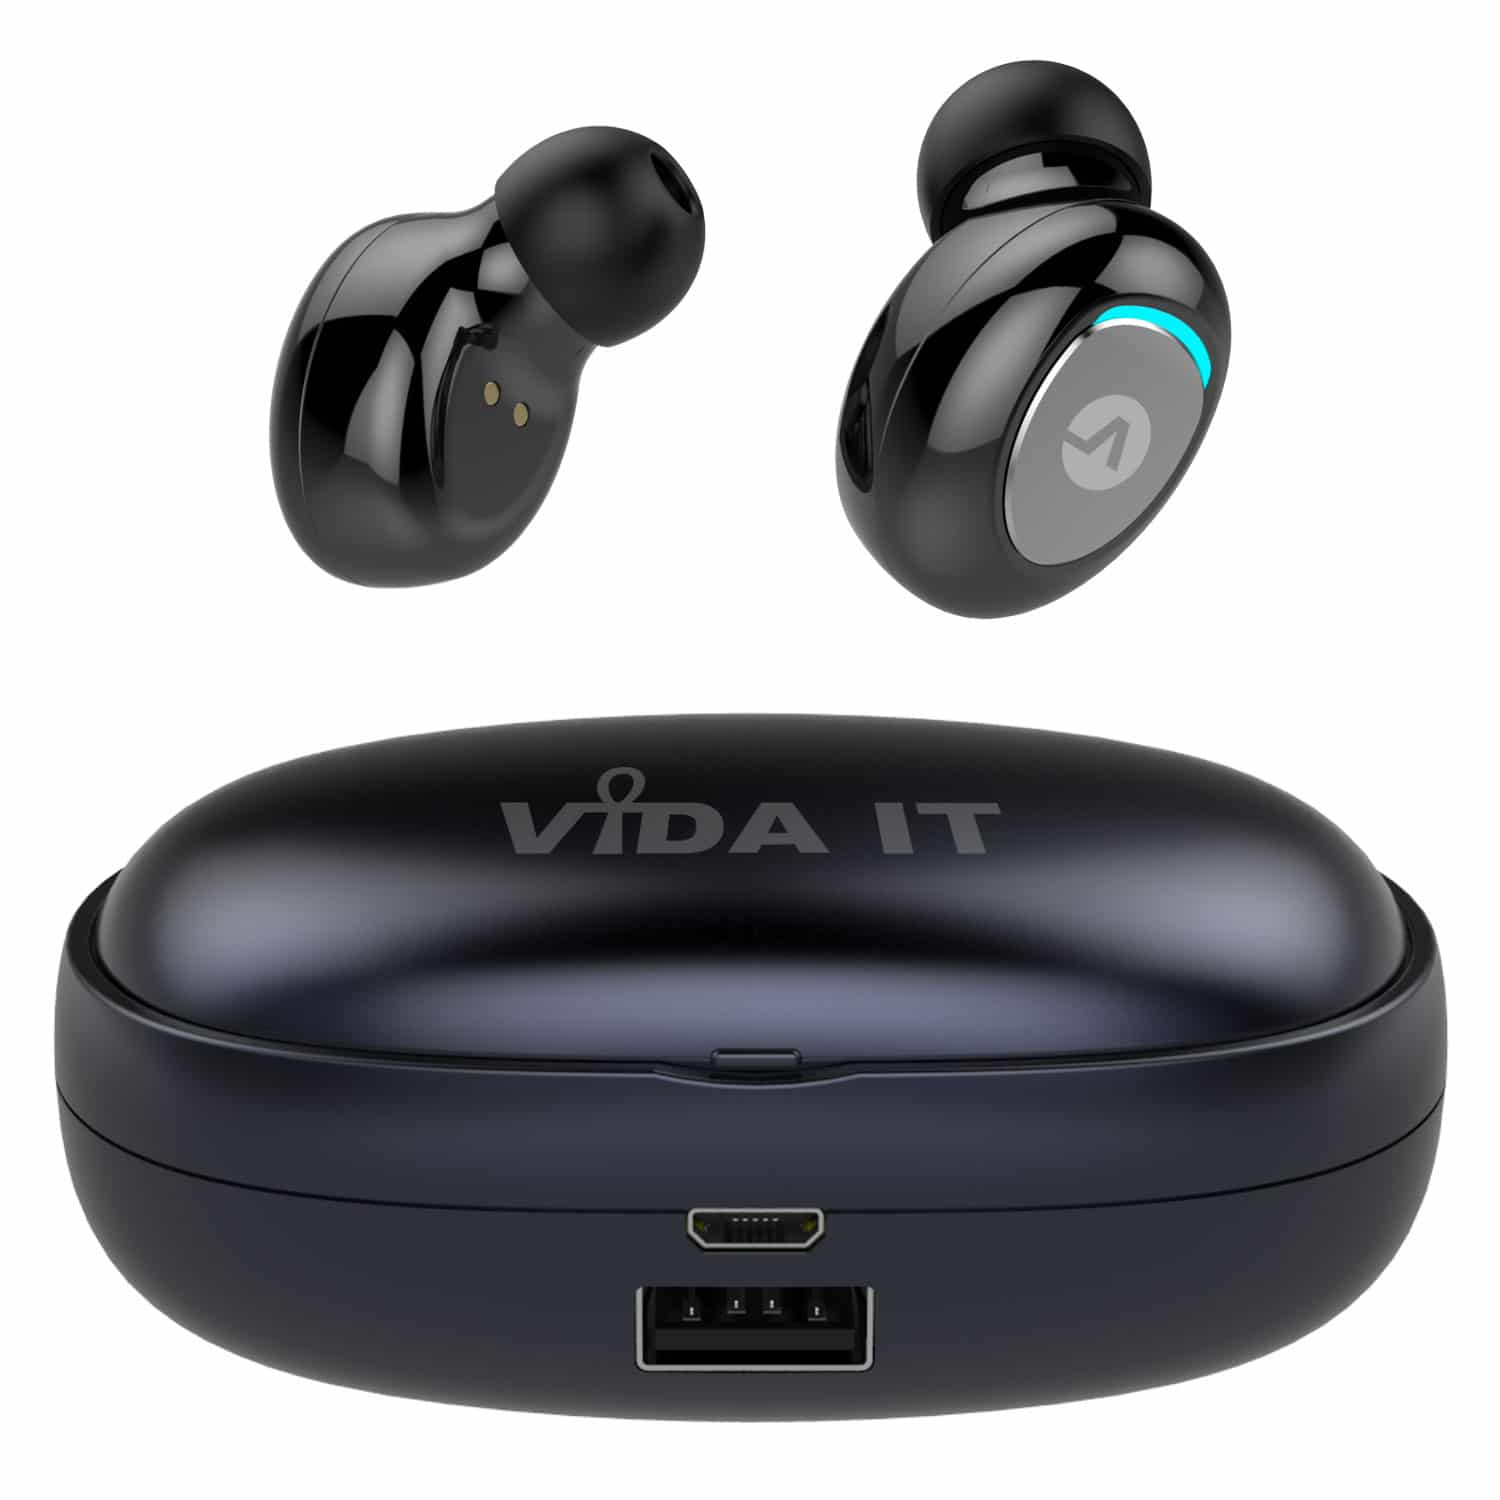 Vida IT wireless earbuds vBuds earphones